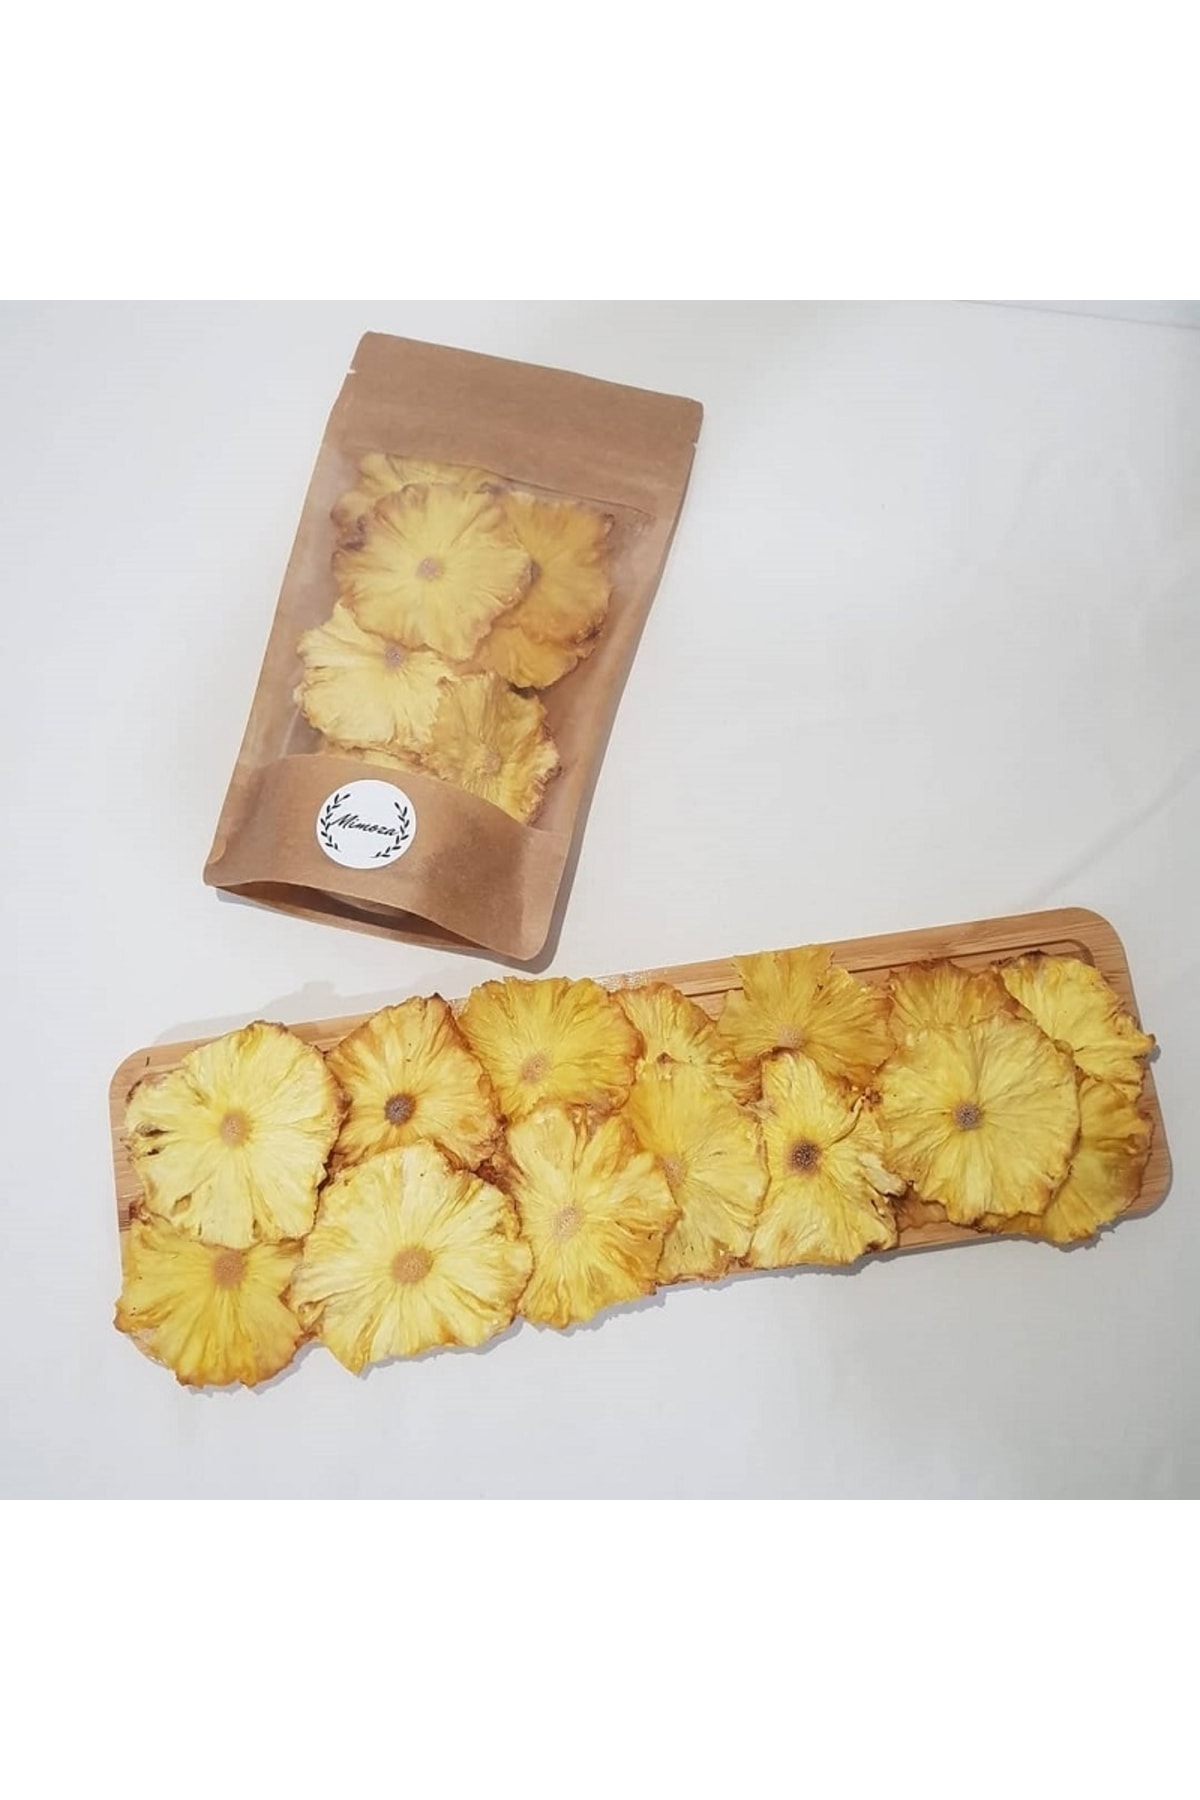 Mimoza Kurutulmuş Ananas Dilimleri - 25 gram | Şekersiz